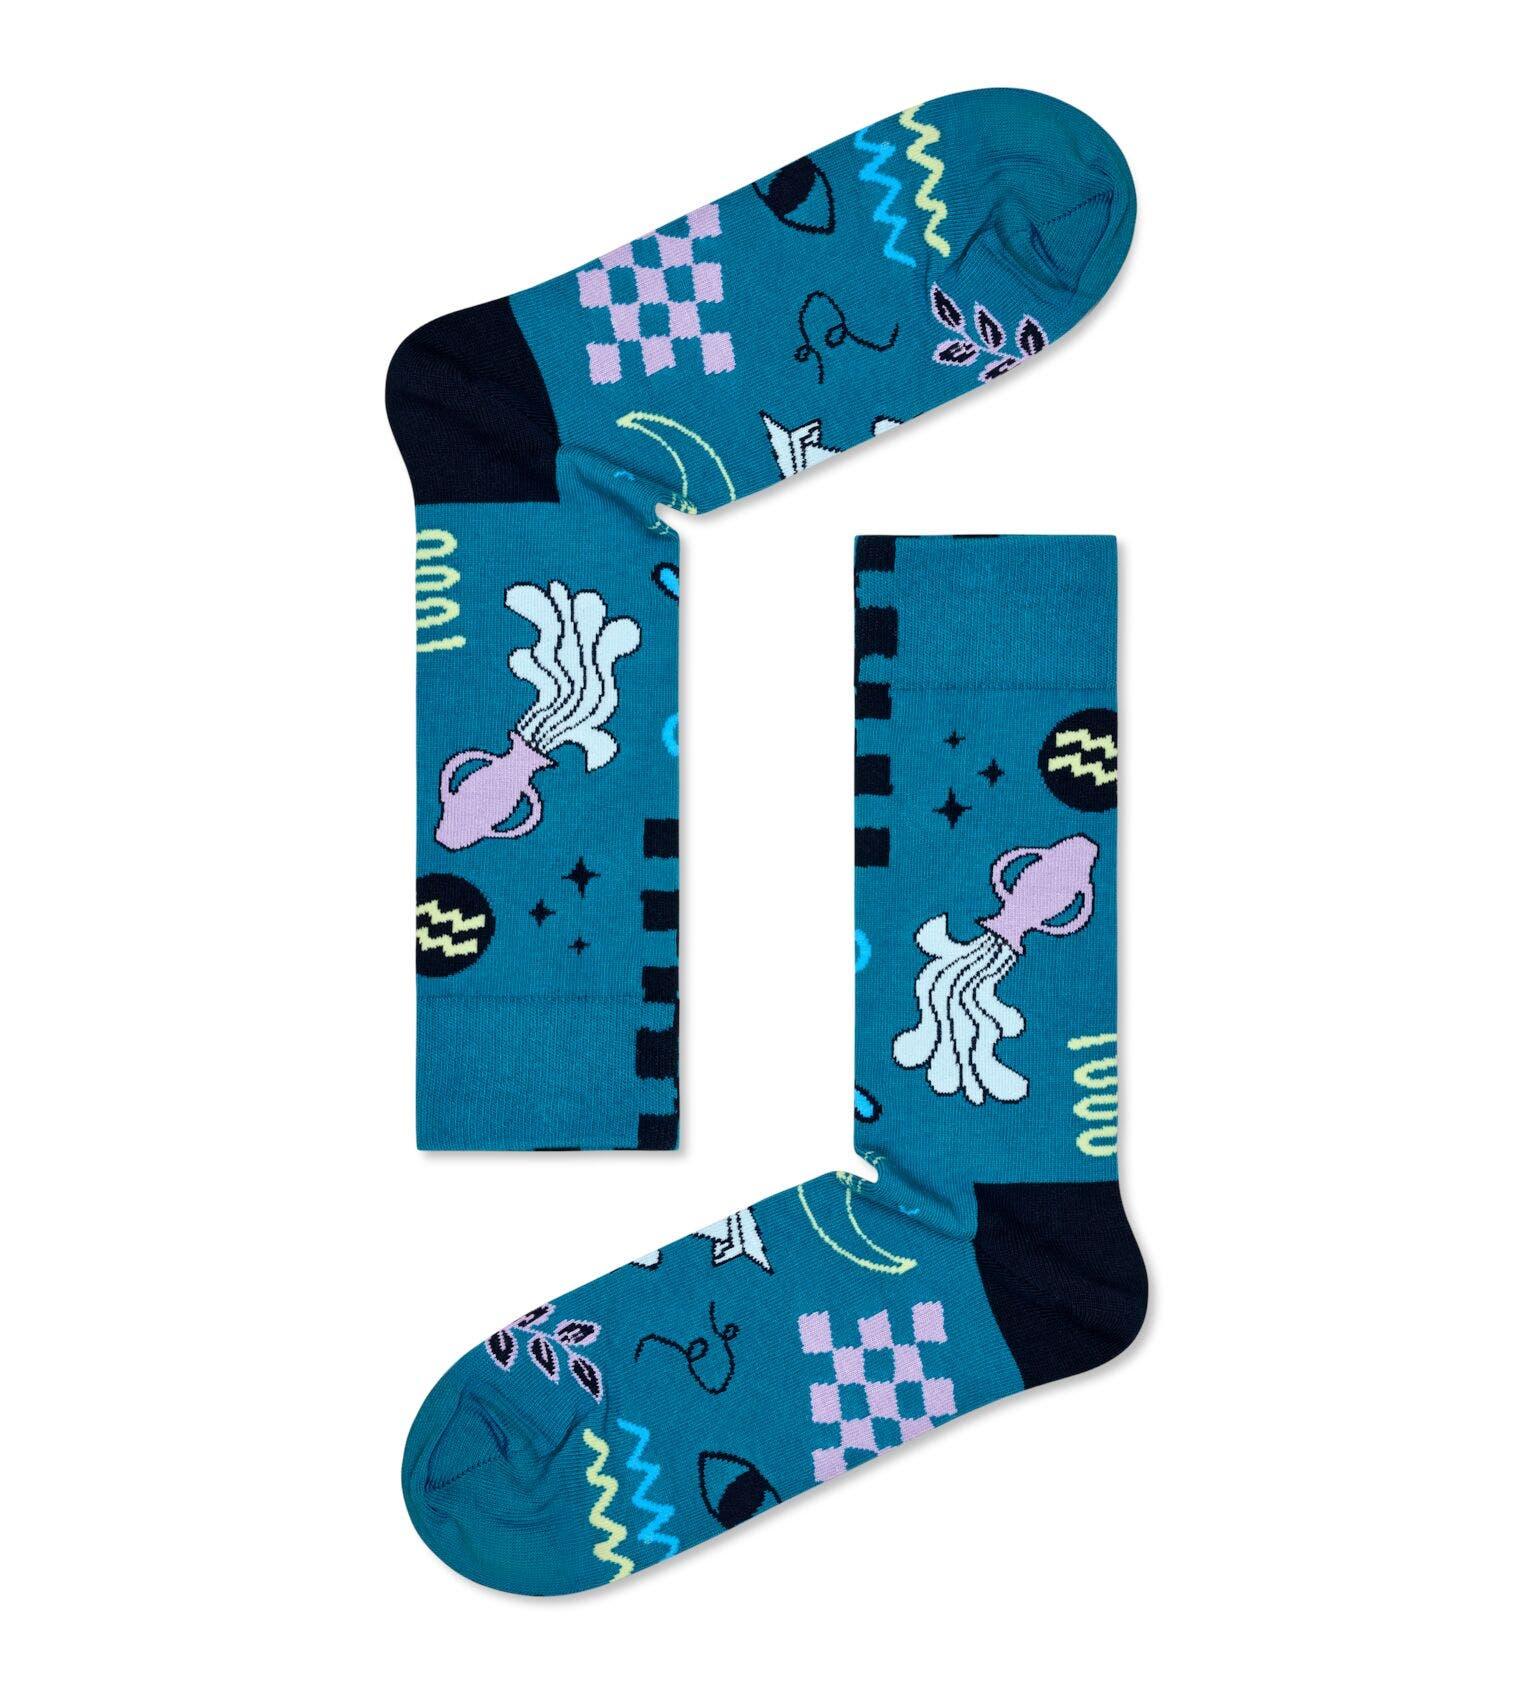 Happy Socks Aquarius Sock - No Generation